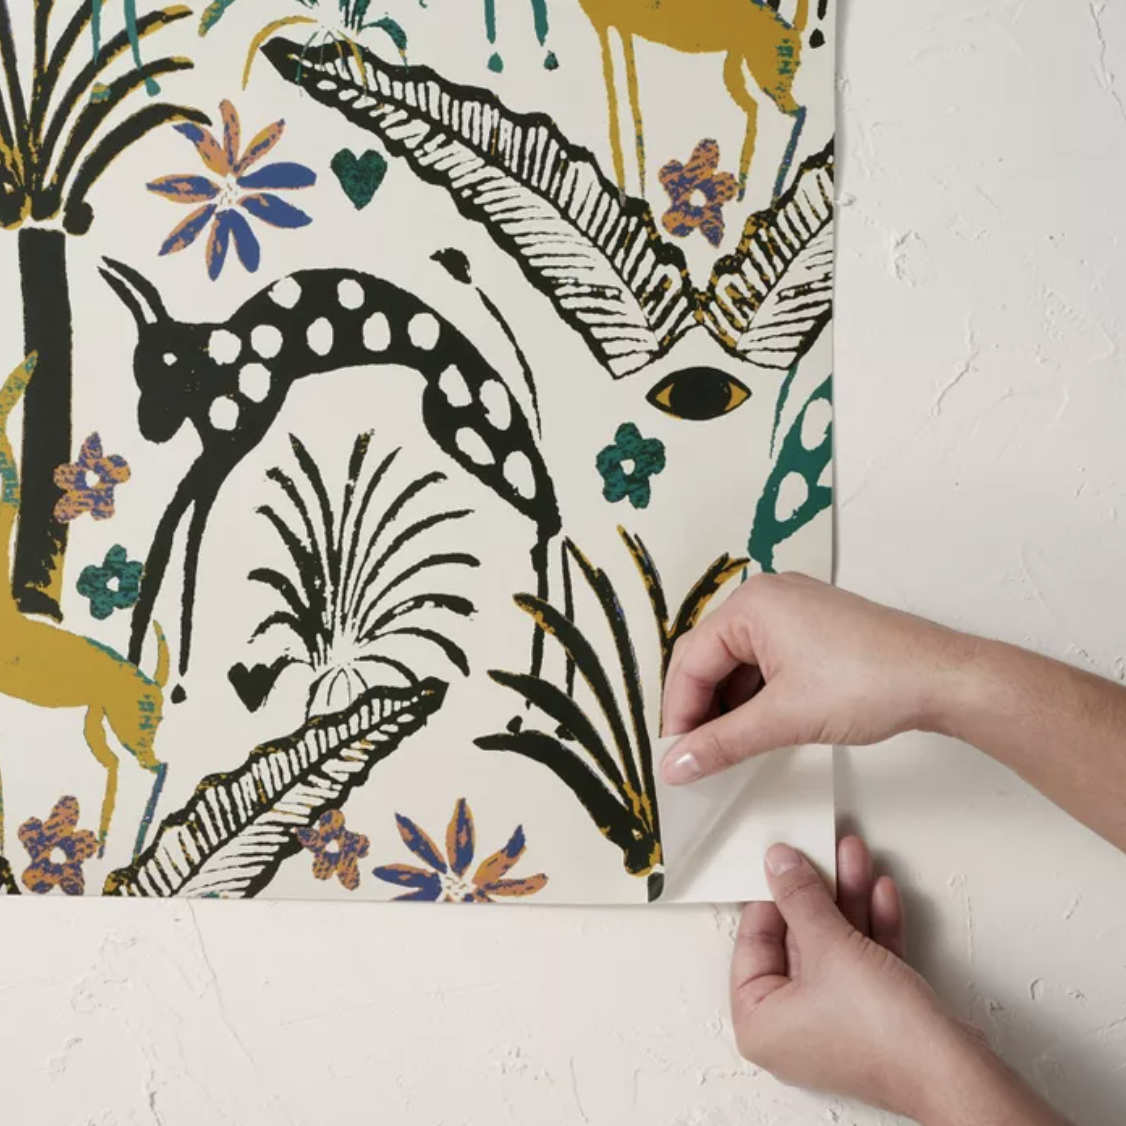 Model peeling back multicolored jungle-themed wallpaper